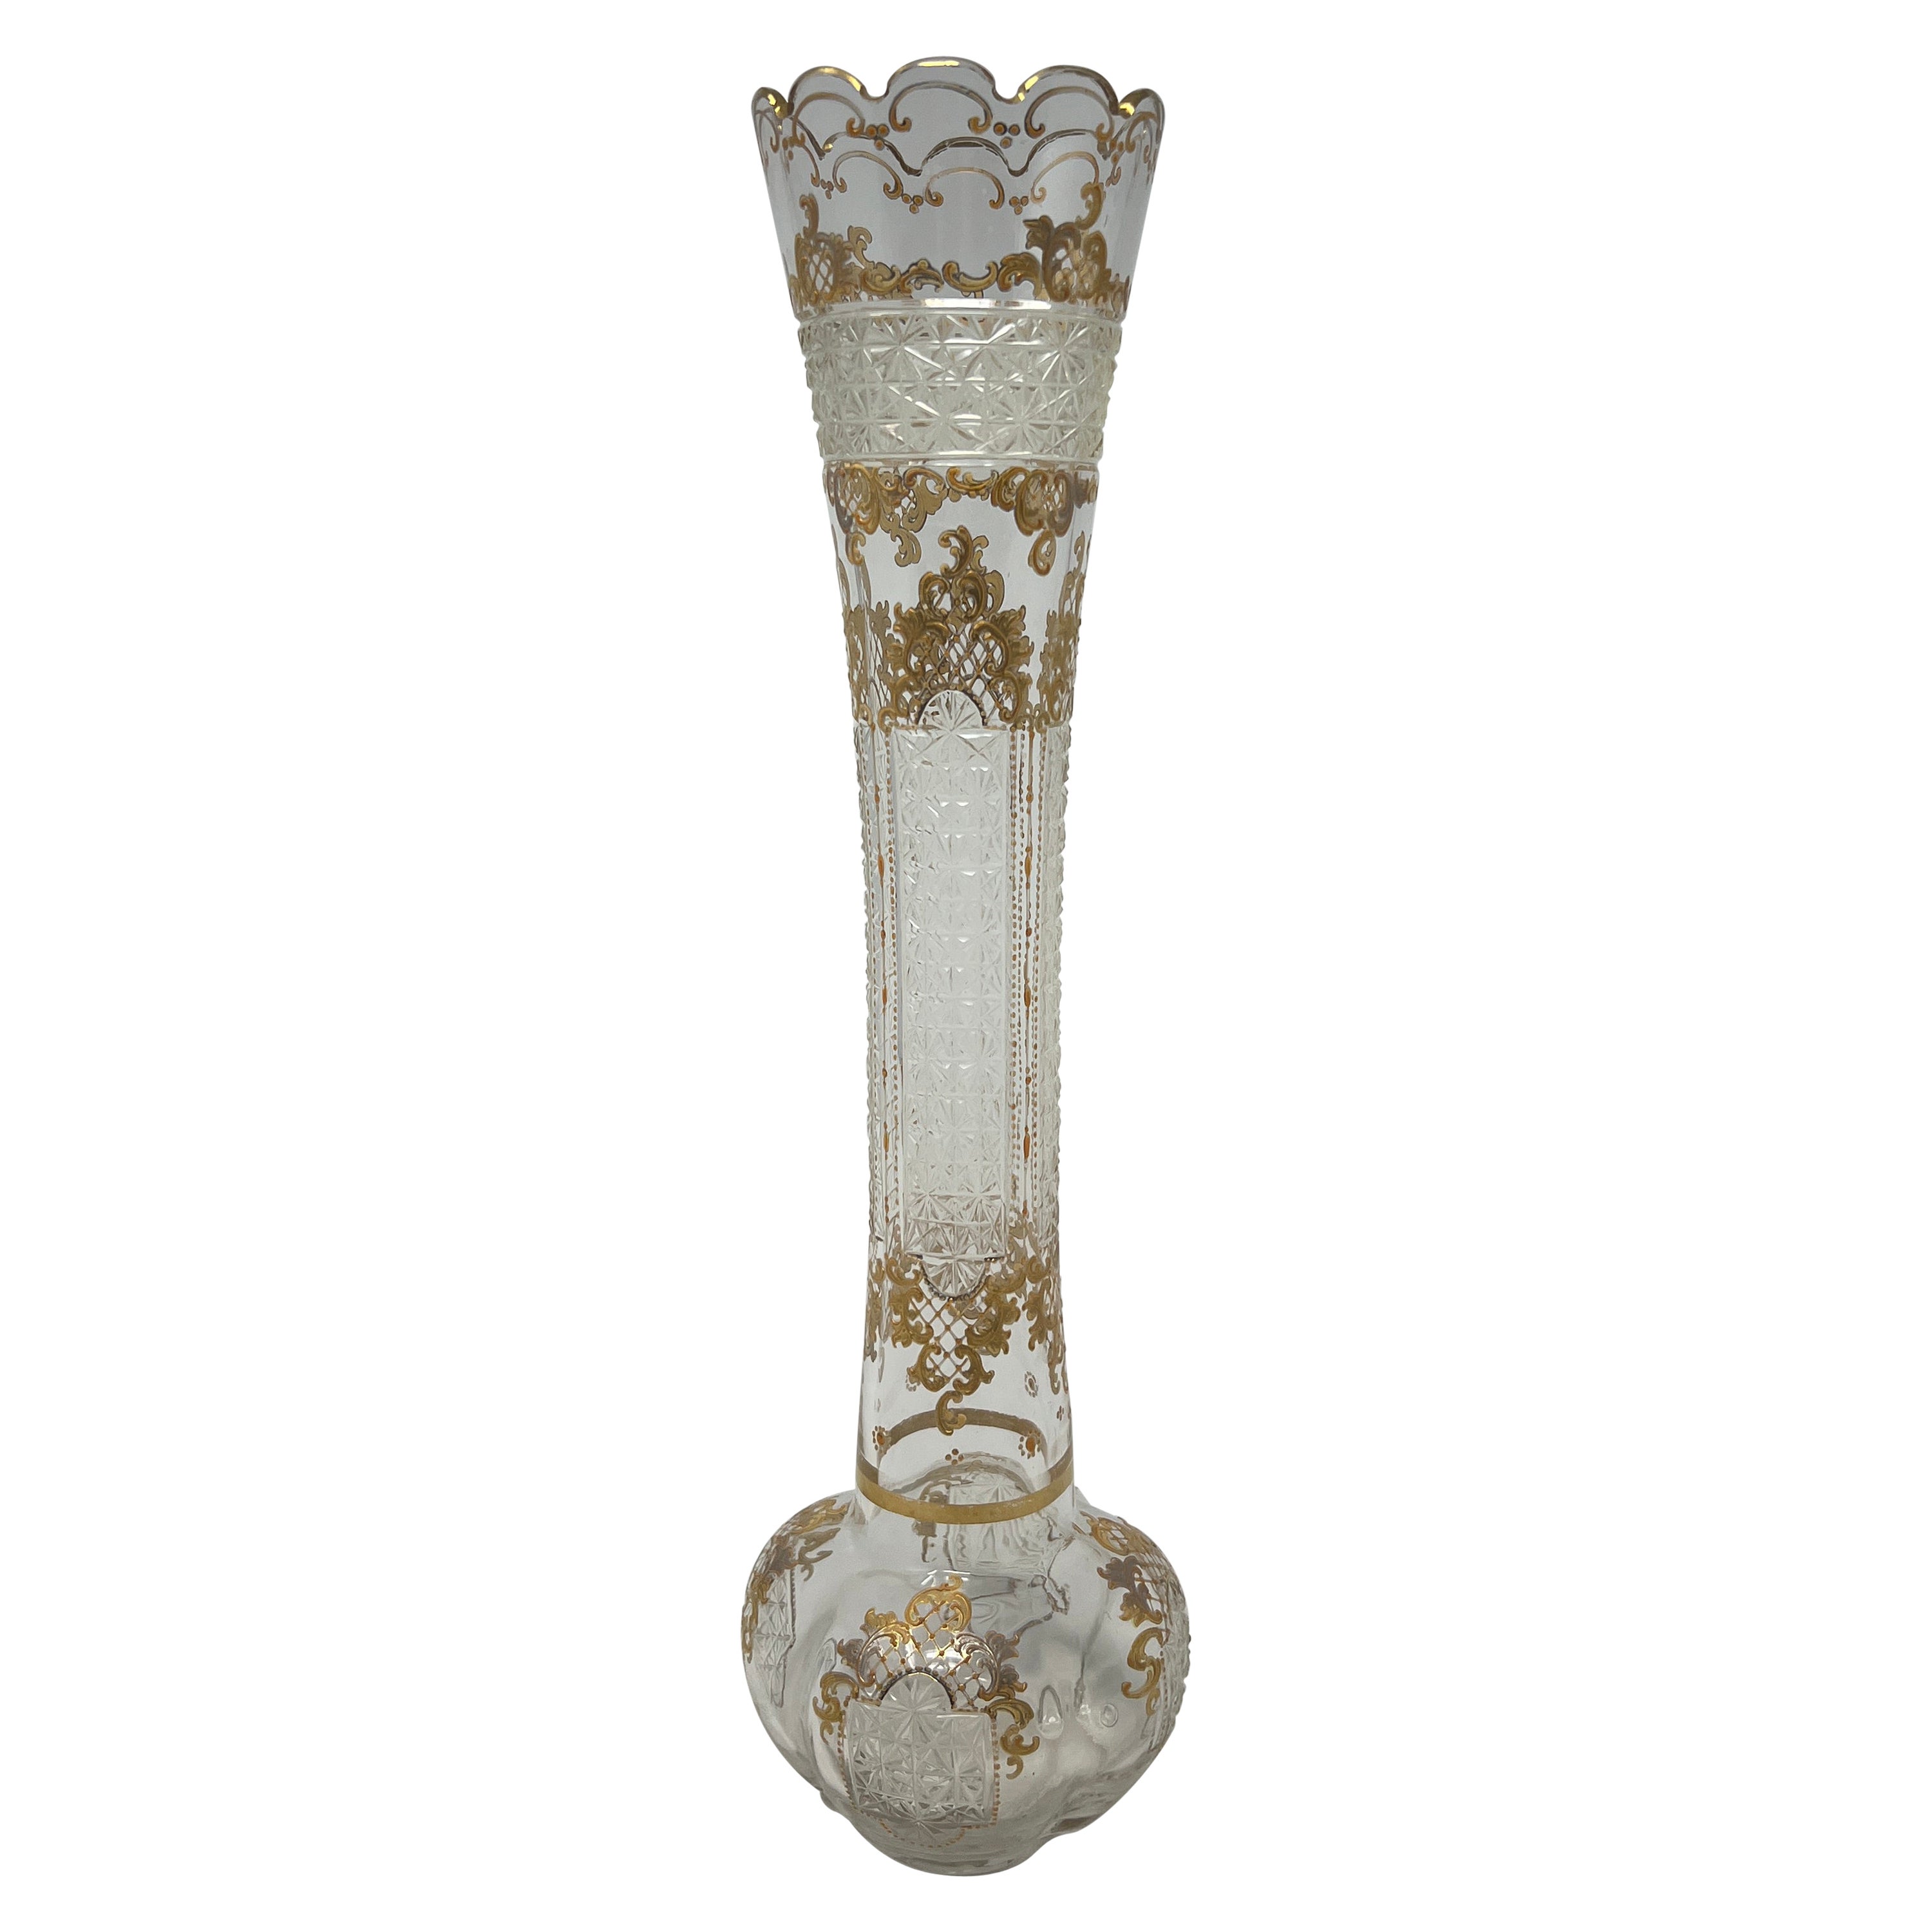 Antique German Moser Cut Glass Bud Vase with Gold Leaf Details, Circa 1880's.